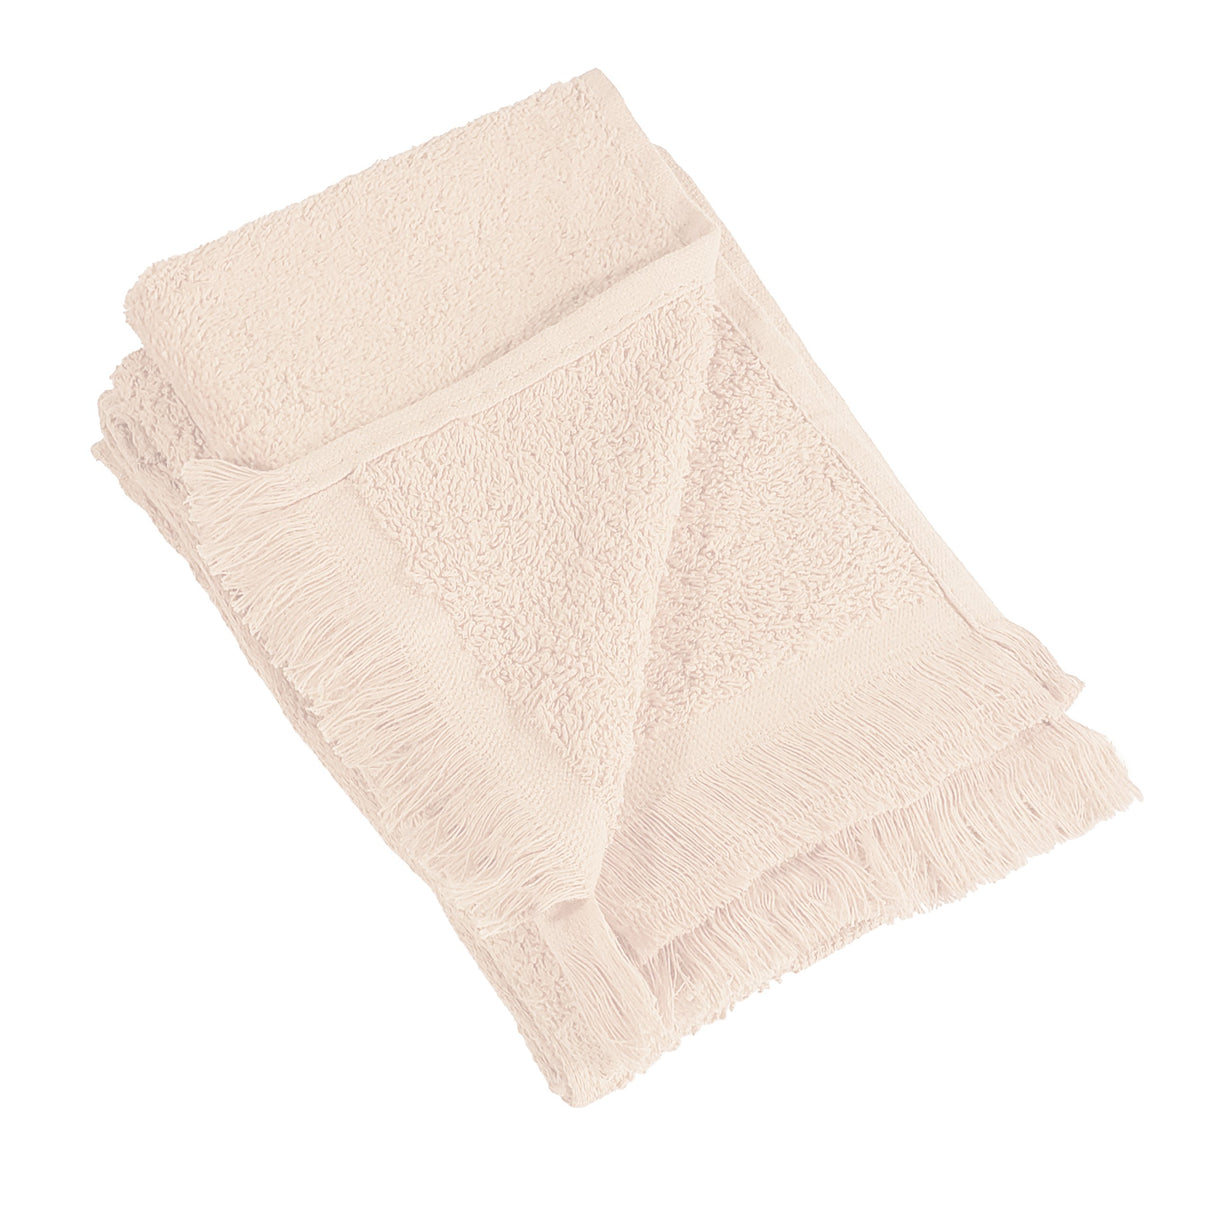 Wholesale Fringed Towel Natural